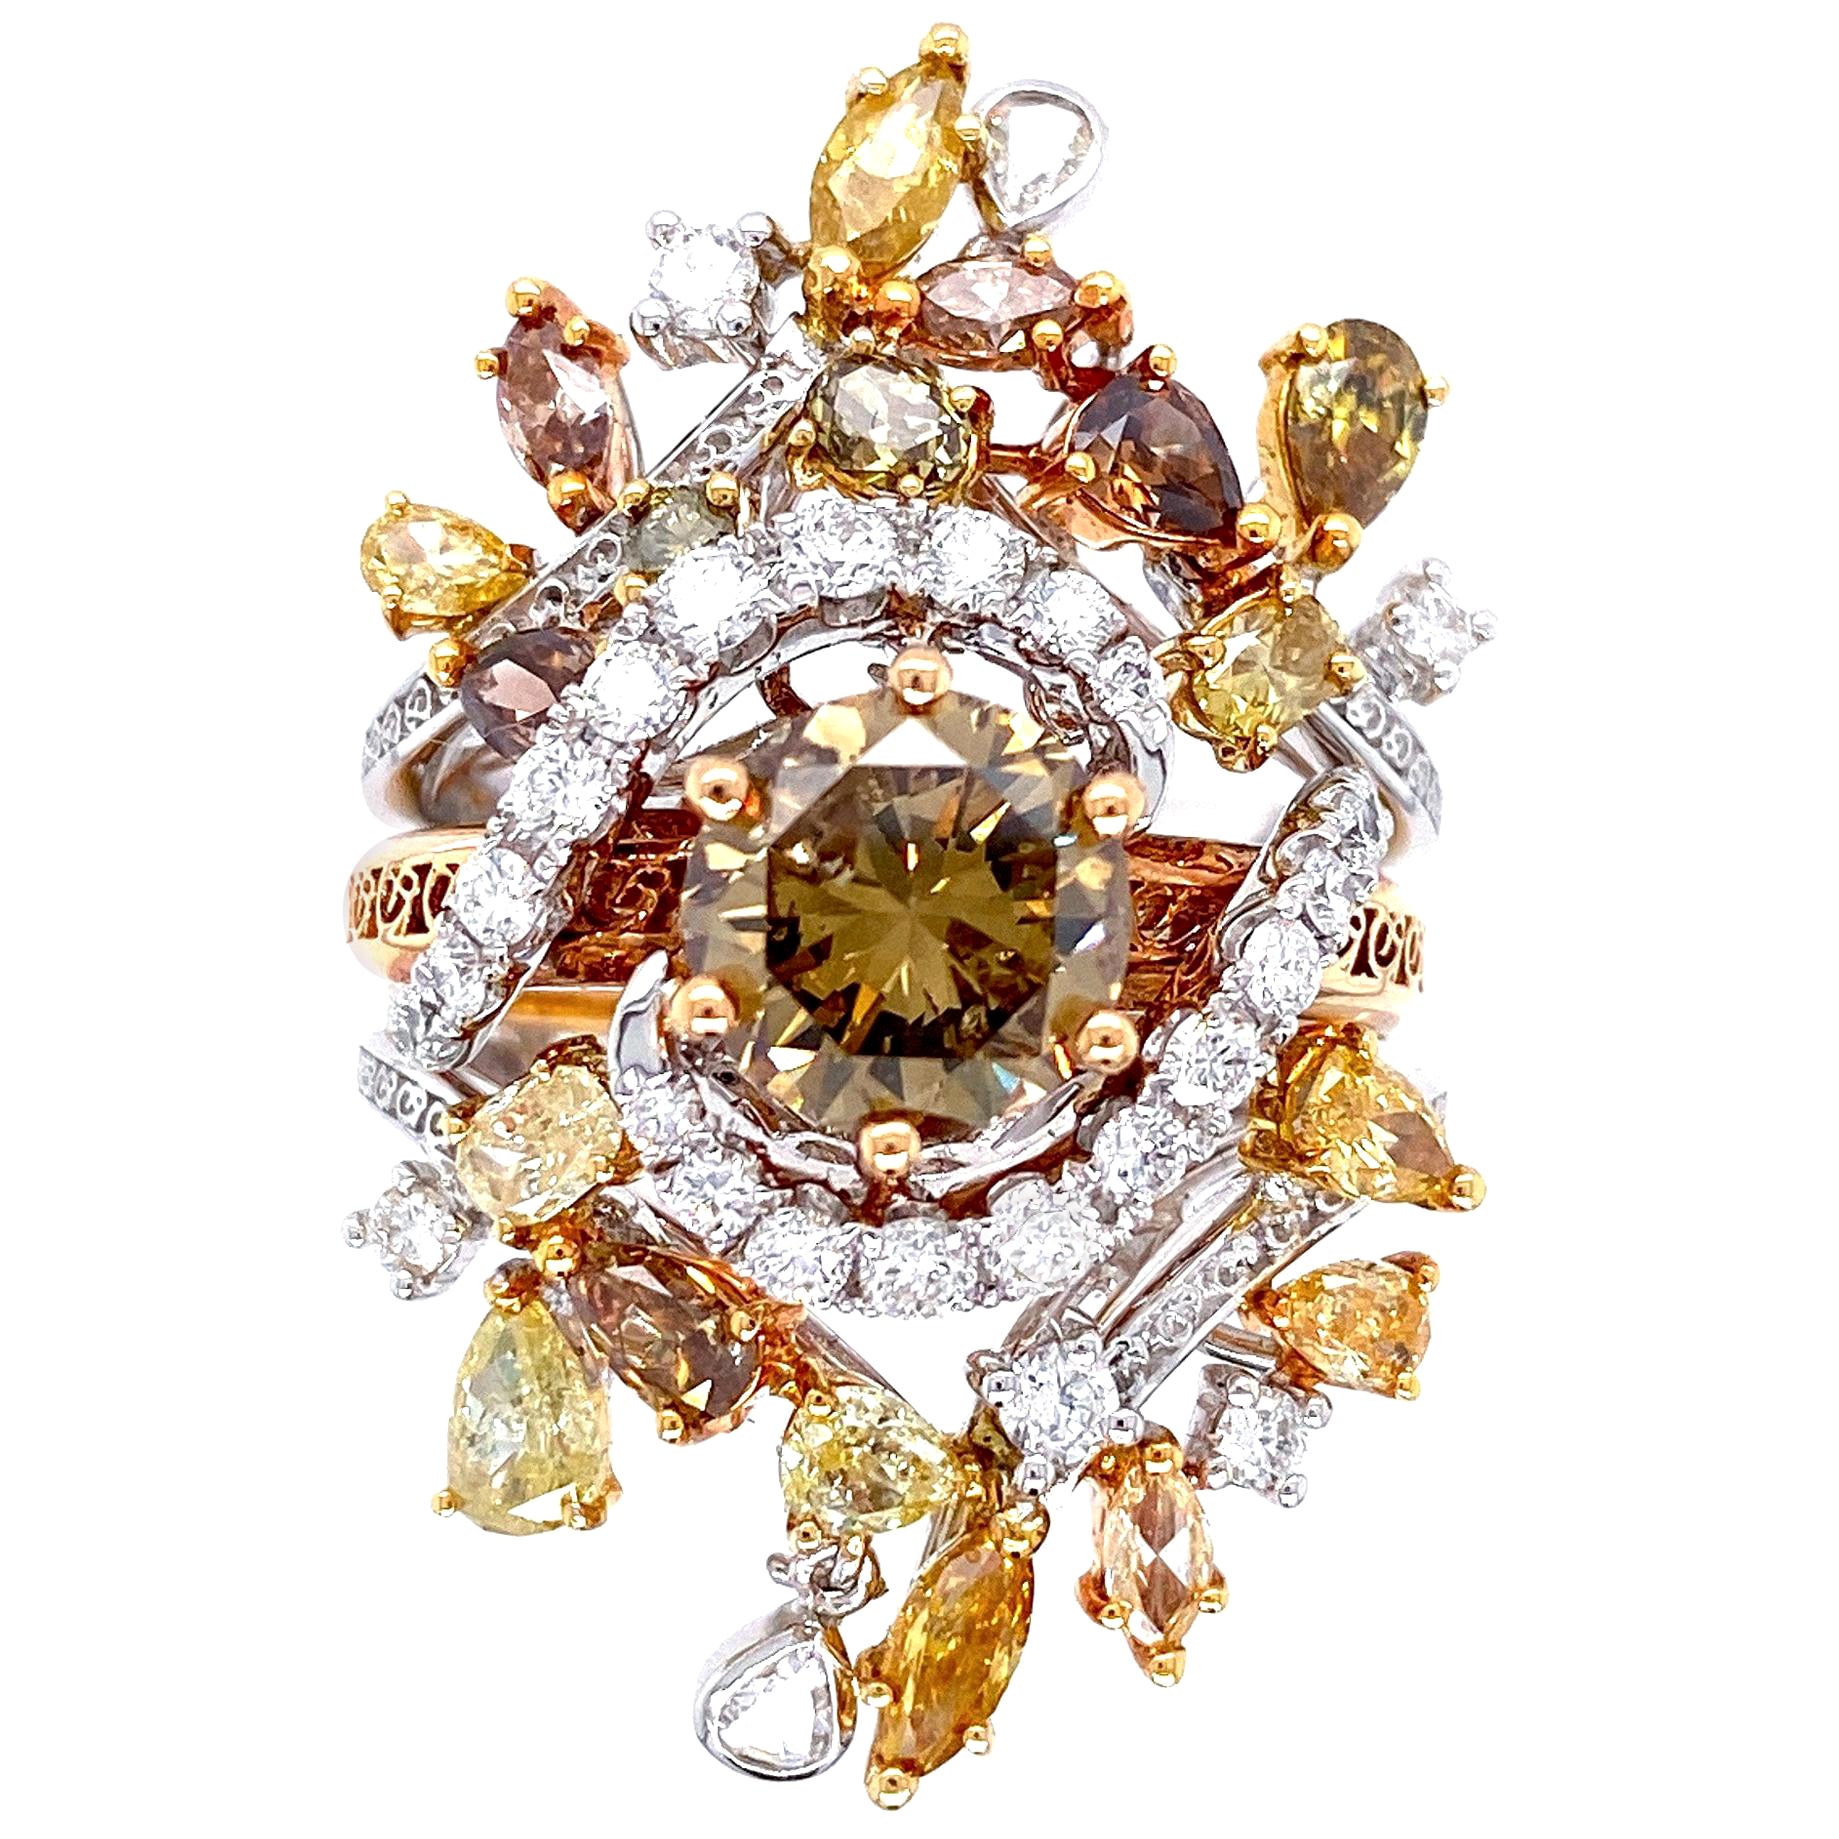 Dilys' Certified 3.57ct Brown Diamond Transformable Ring in 18 Karat Gold